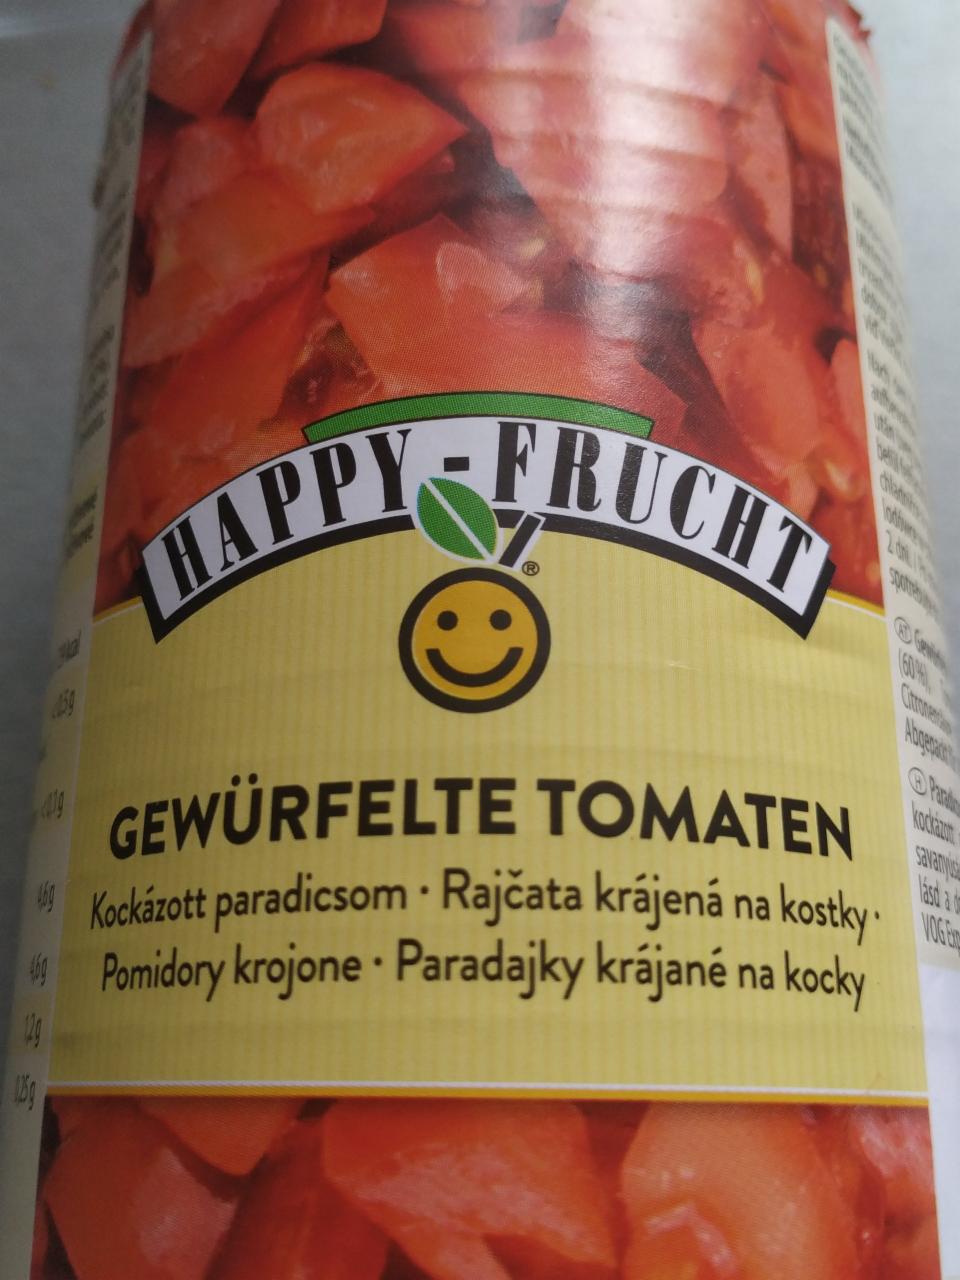 Fotografie - Gewürfelte tomaten (paradajky krájané na kocky) Happy - frucht